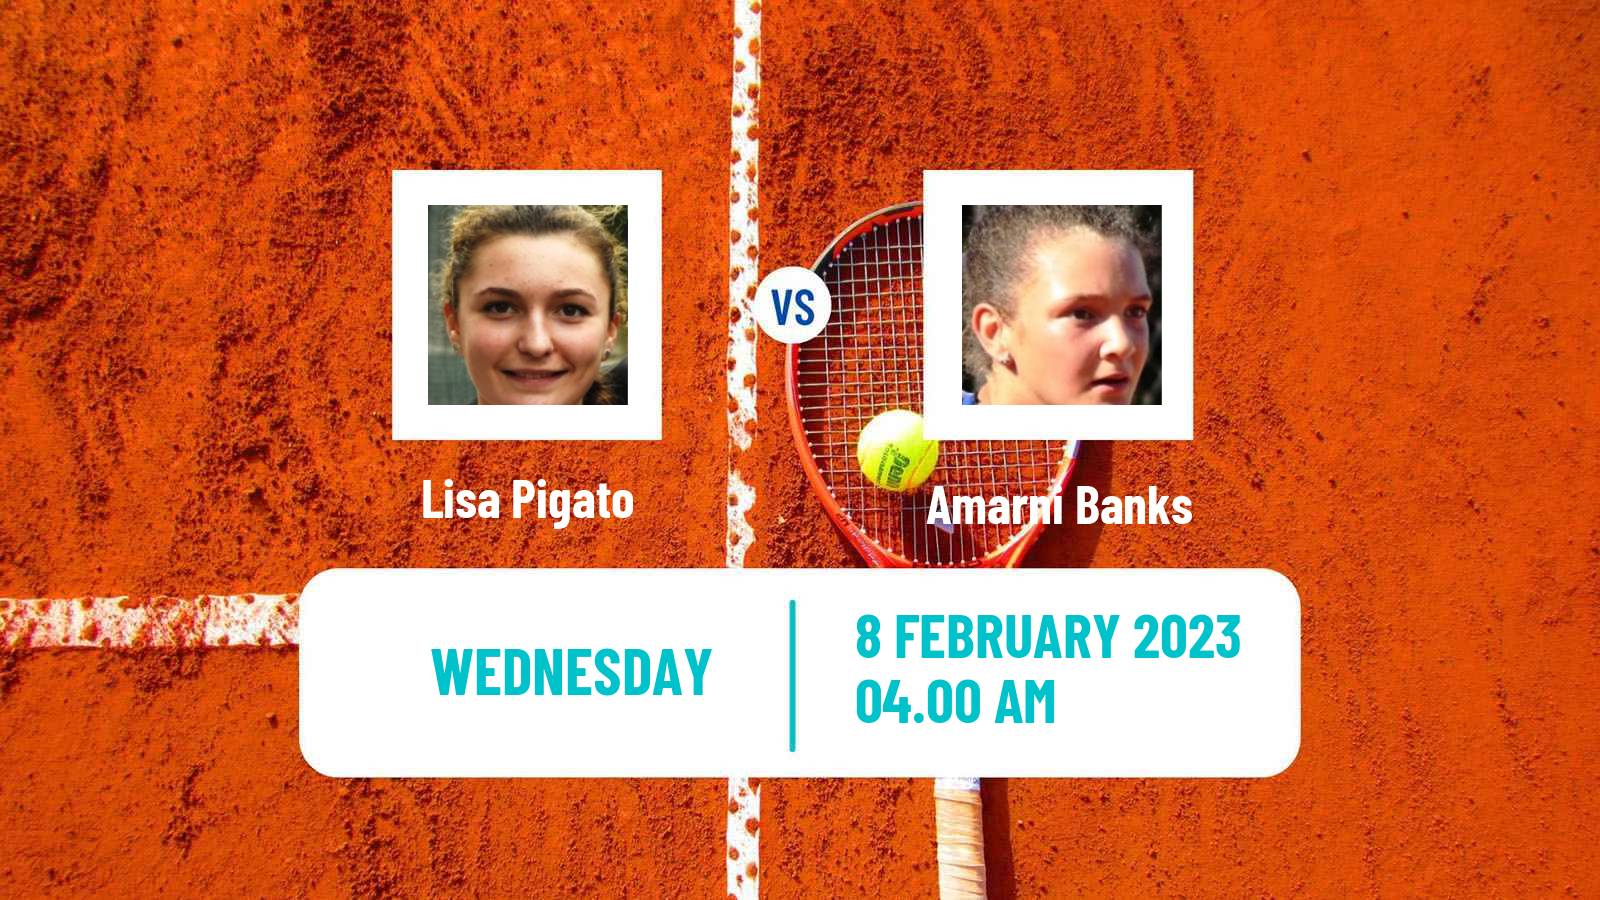 Tennis ITF Tournaments Lisa Pigato - Amarni Banks